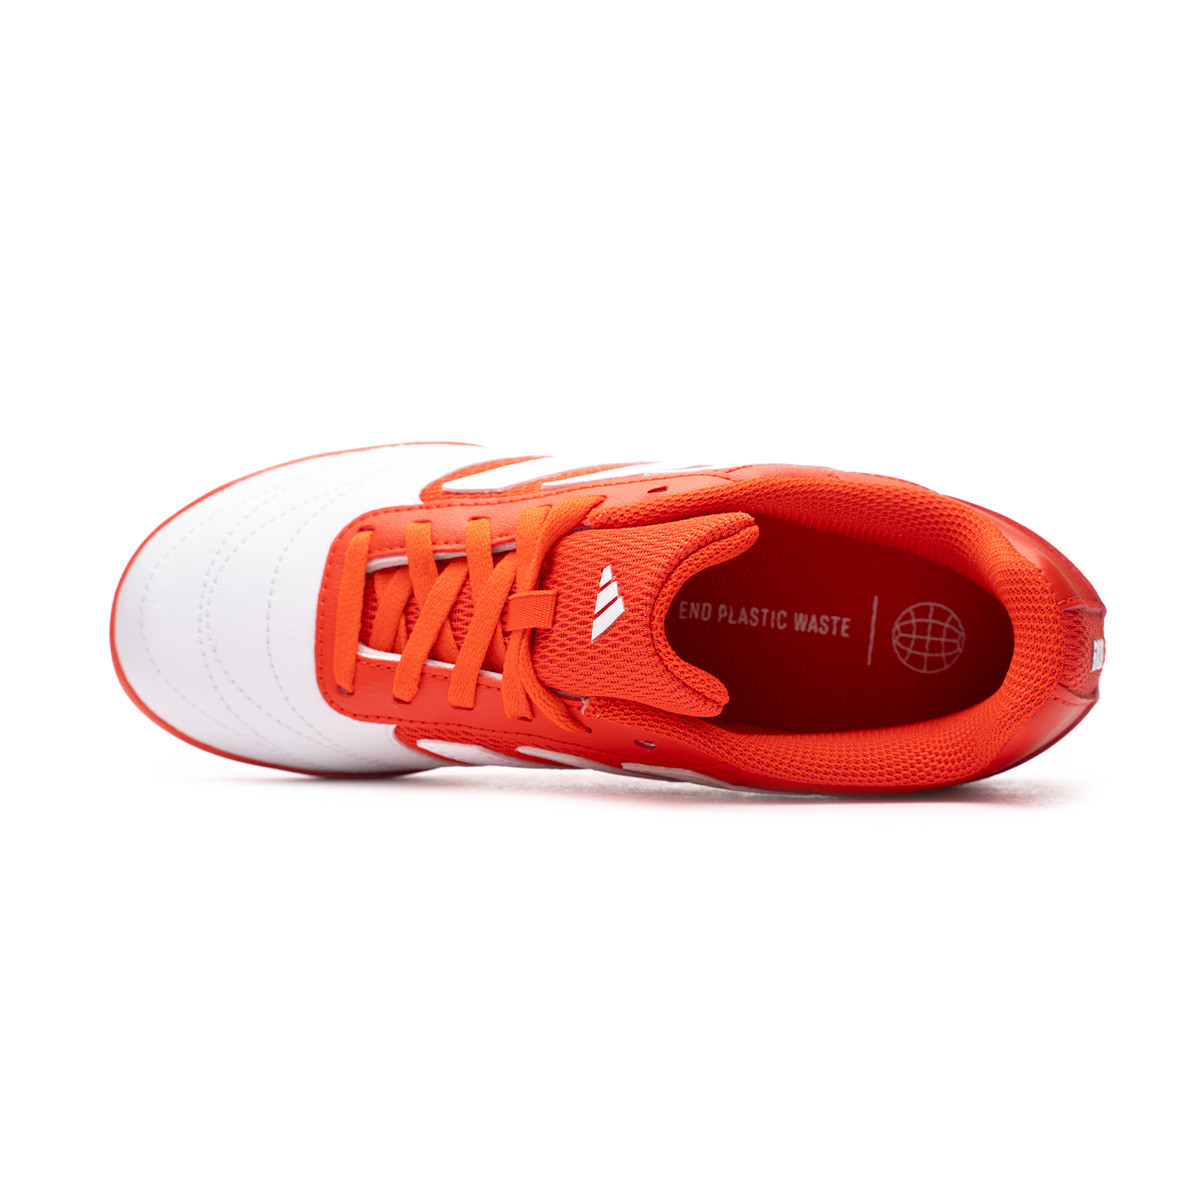 Chaussures de Futsal Orange Homme Adidas Super Sala